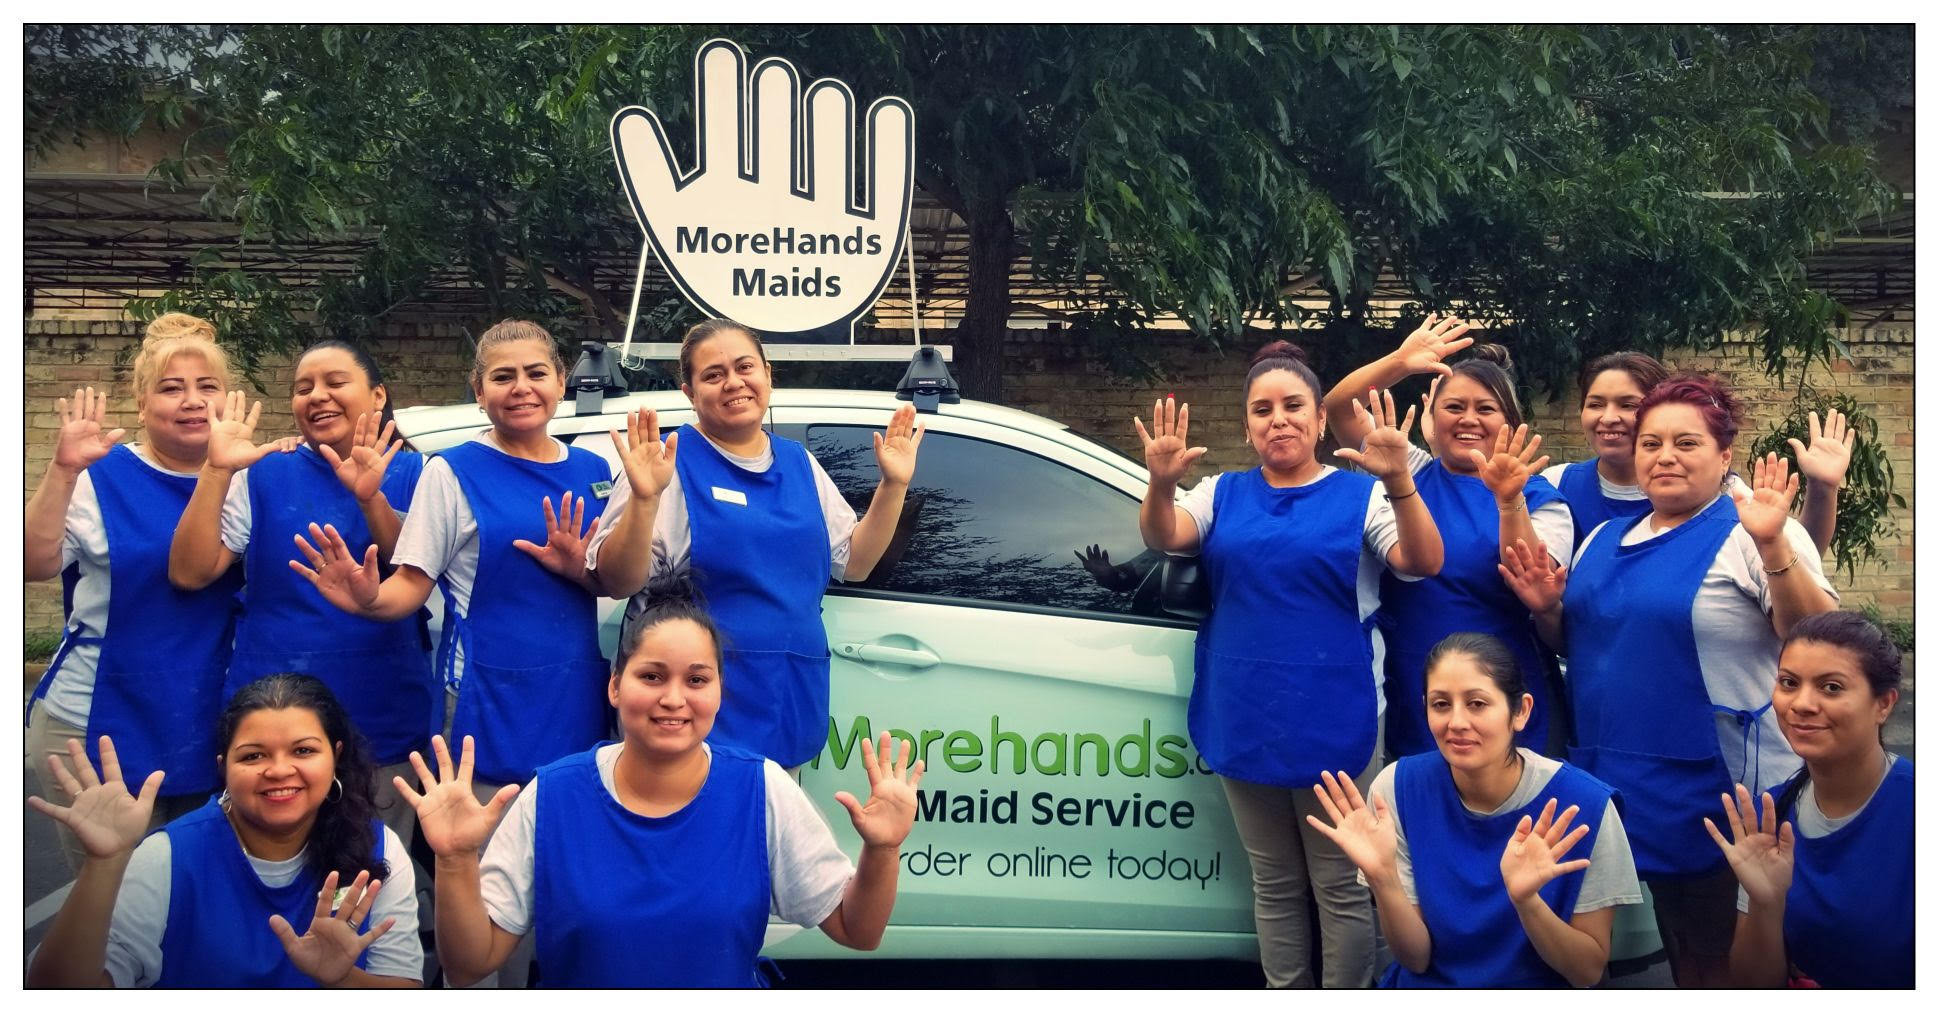 MoreHands Randy De La Cruz, Owner and Operator Managers MoreHands Best Maid Service in Carrollton